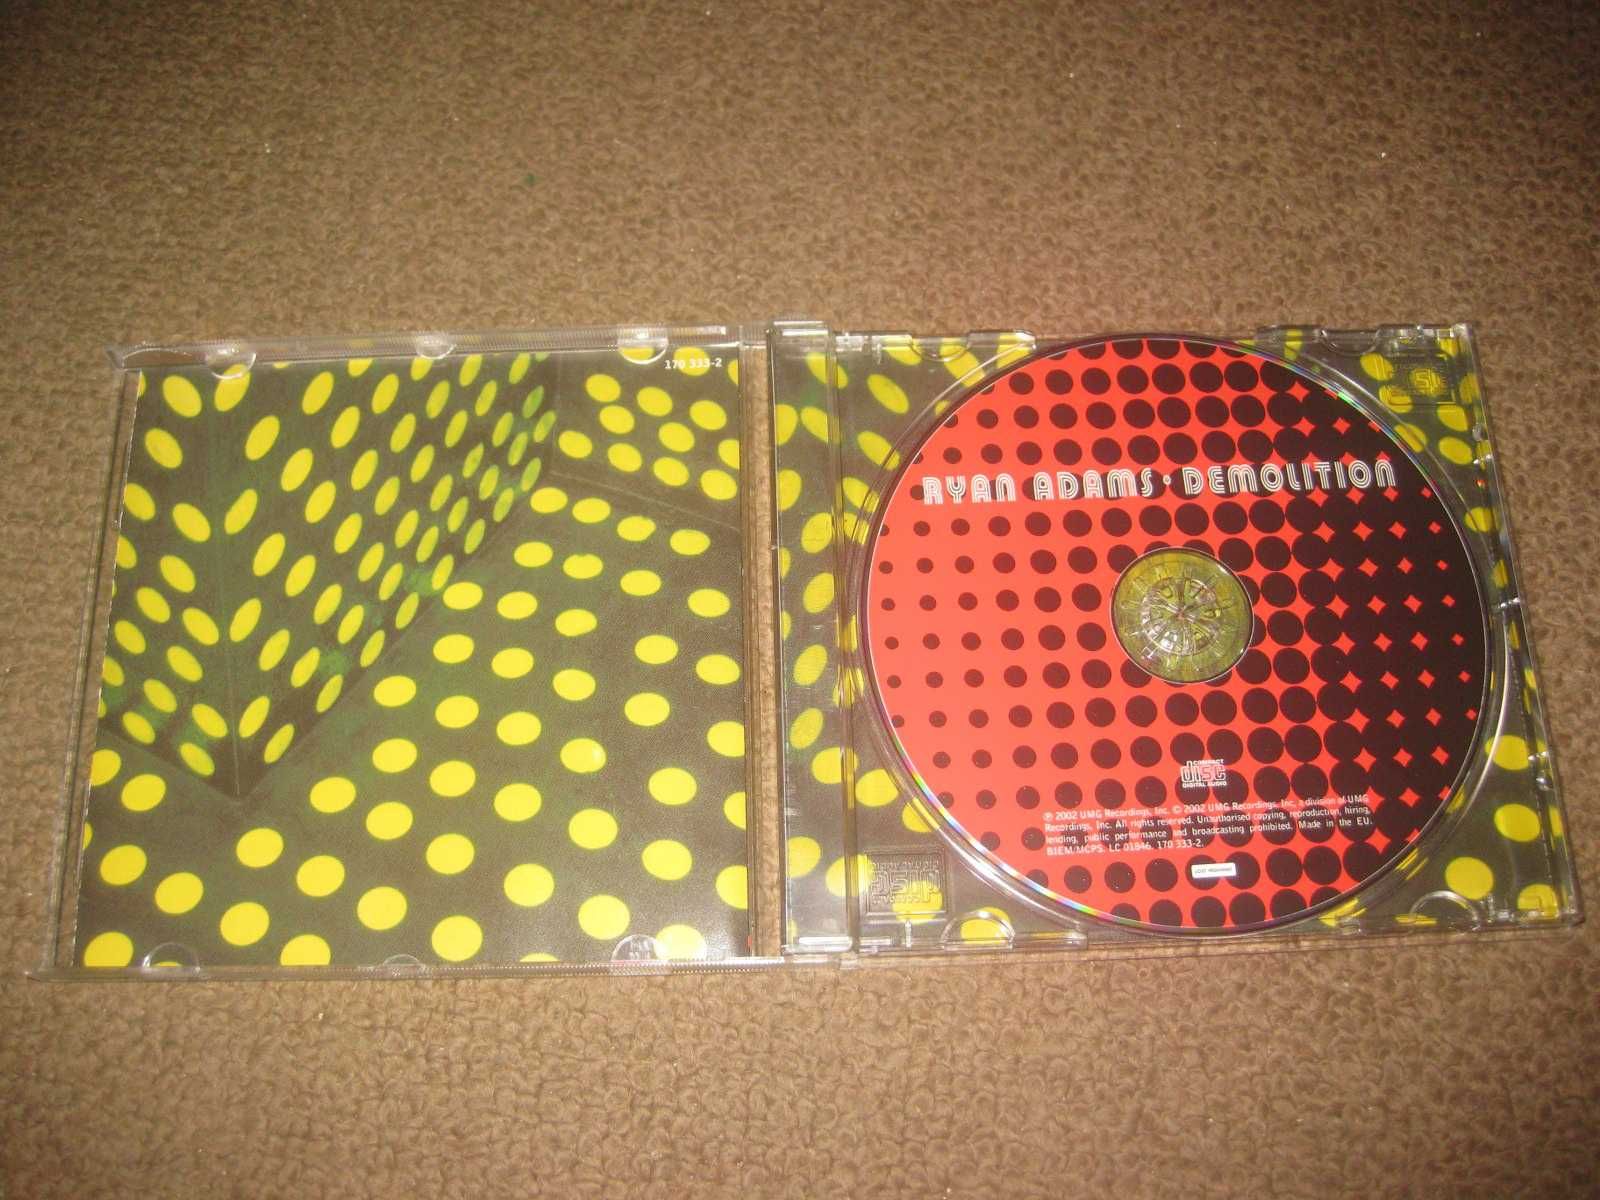 CD do Ryan Adams "Demolition" Portes Grátis!